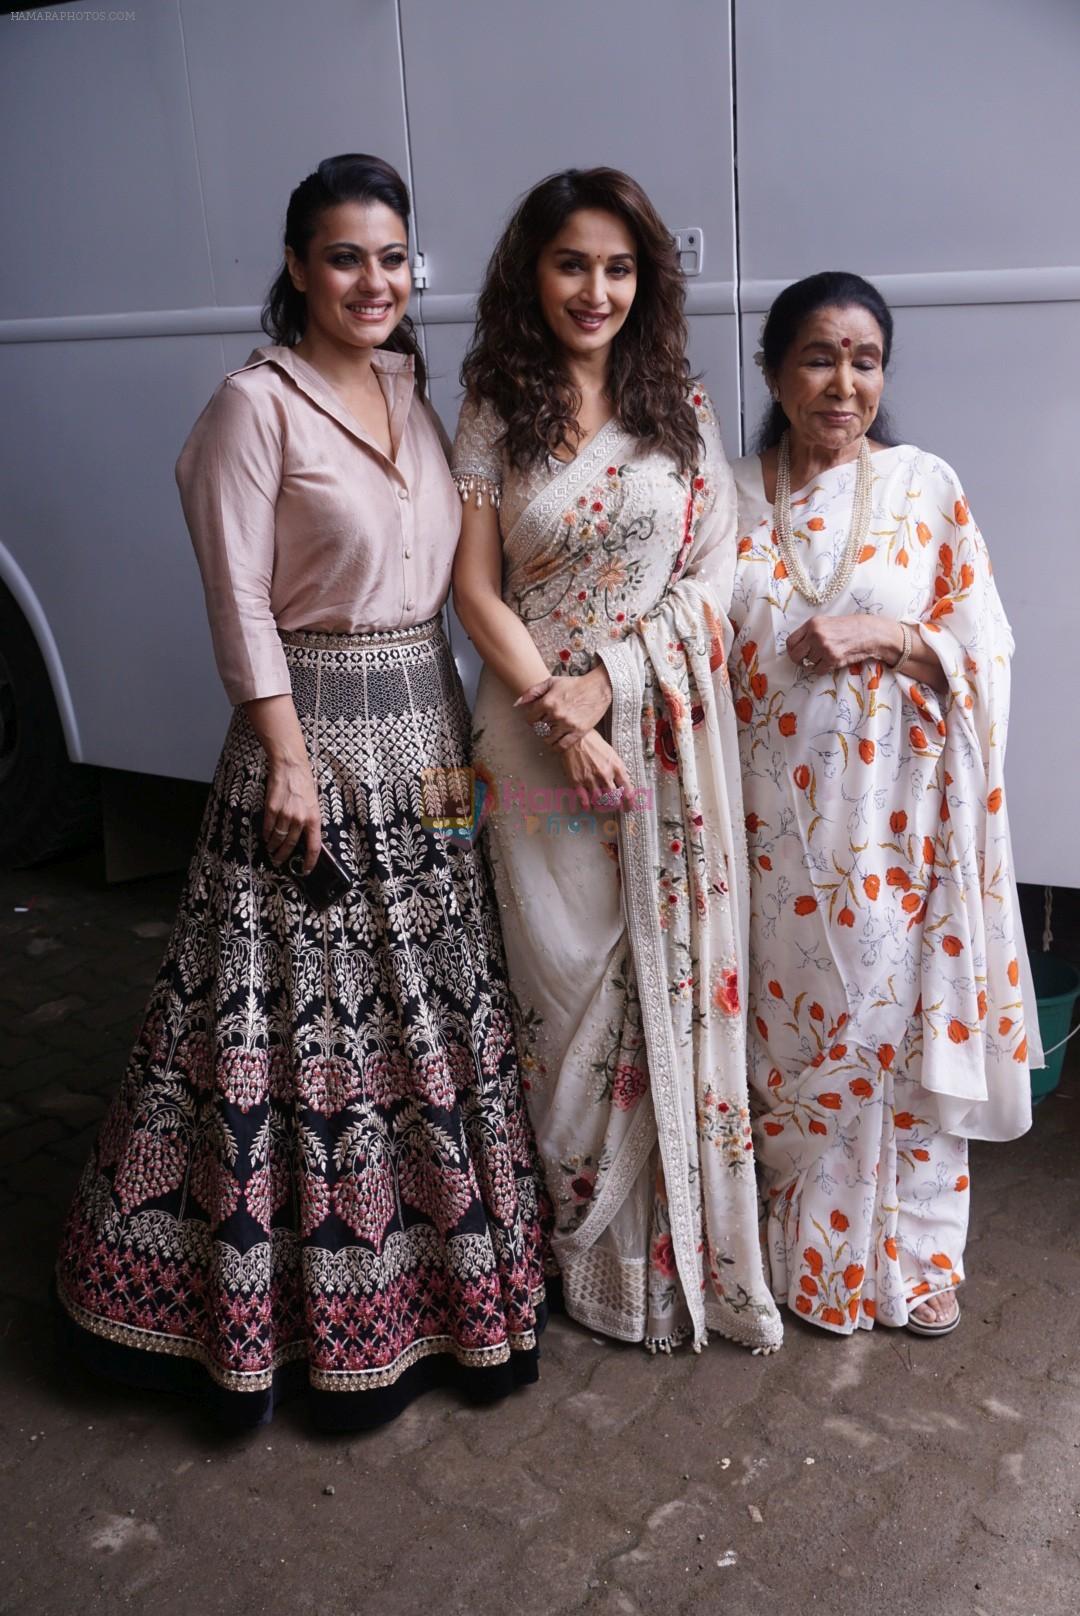 Asha Bhosle, Kajol, Madhuri Dixit On The Sets Of Colors Show Dance Deewane In Filmcity Goregaon on 30th Aug 2018